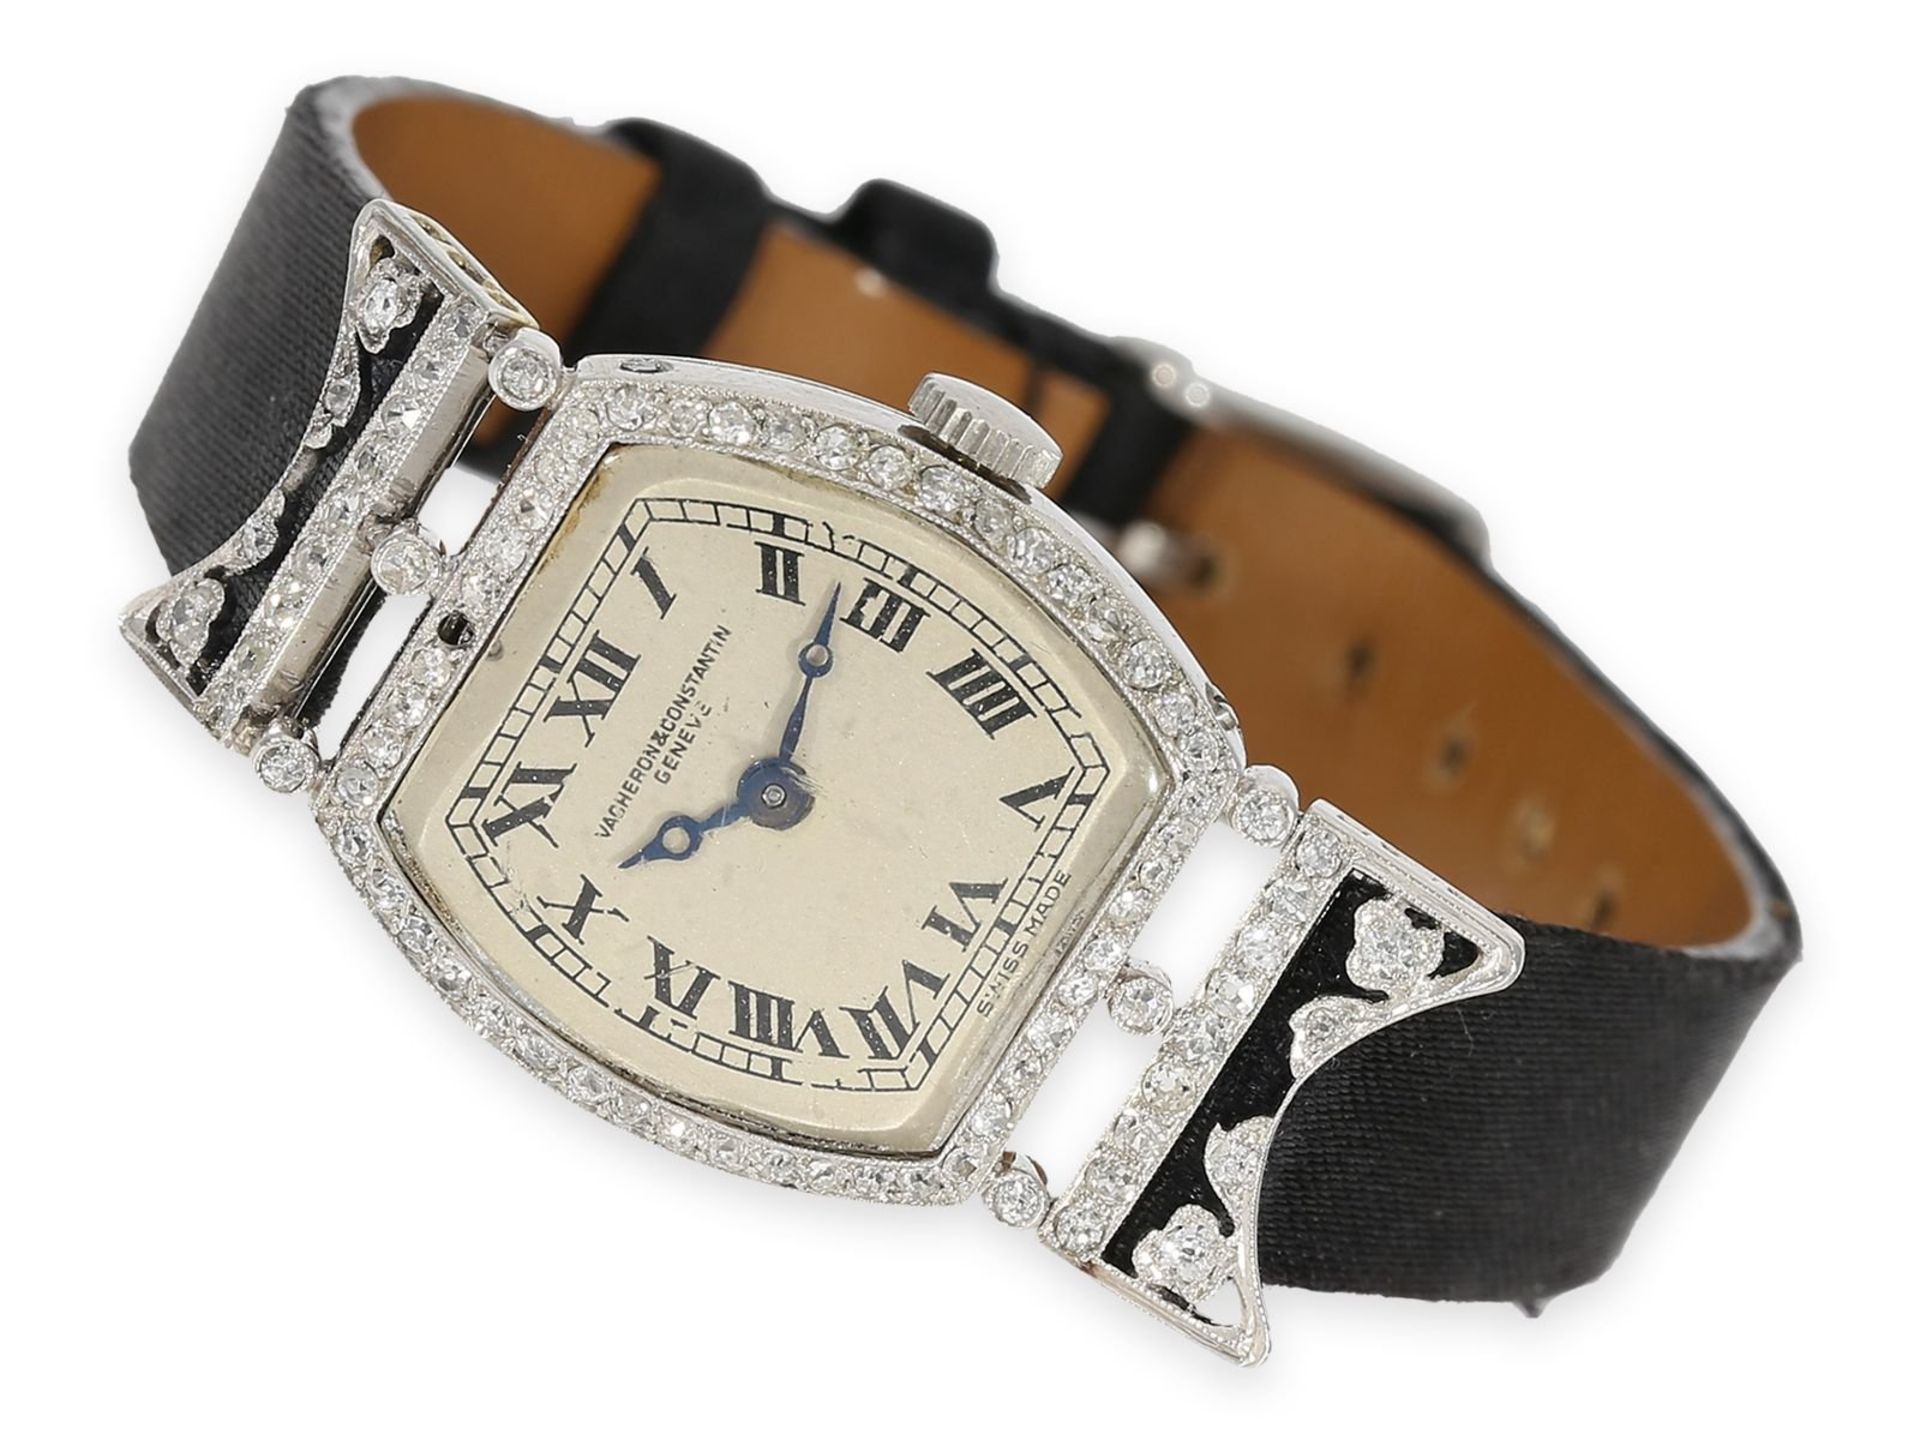 Wristwatch: extremely rare Vacheron & Constantin platinum cocktail watch with diamond setting, Art